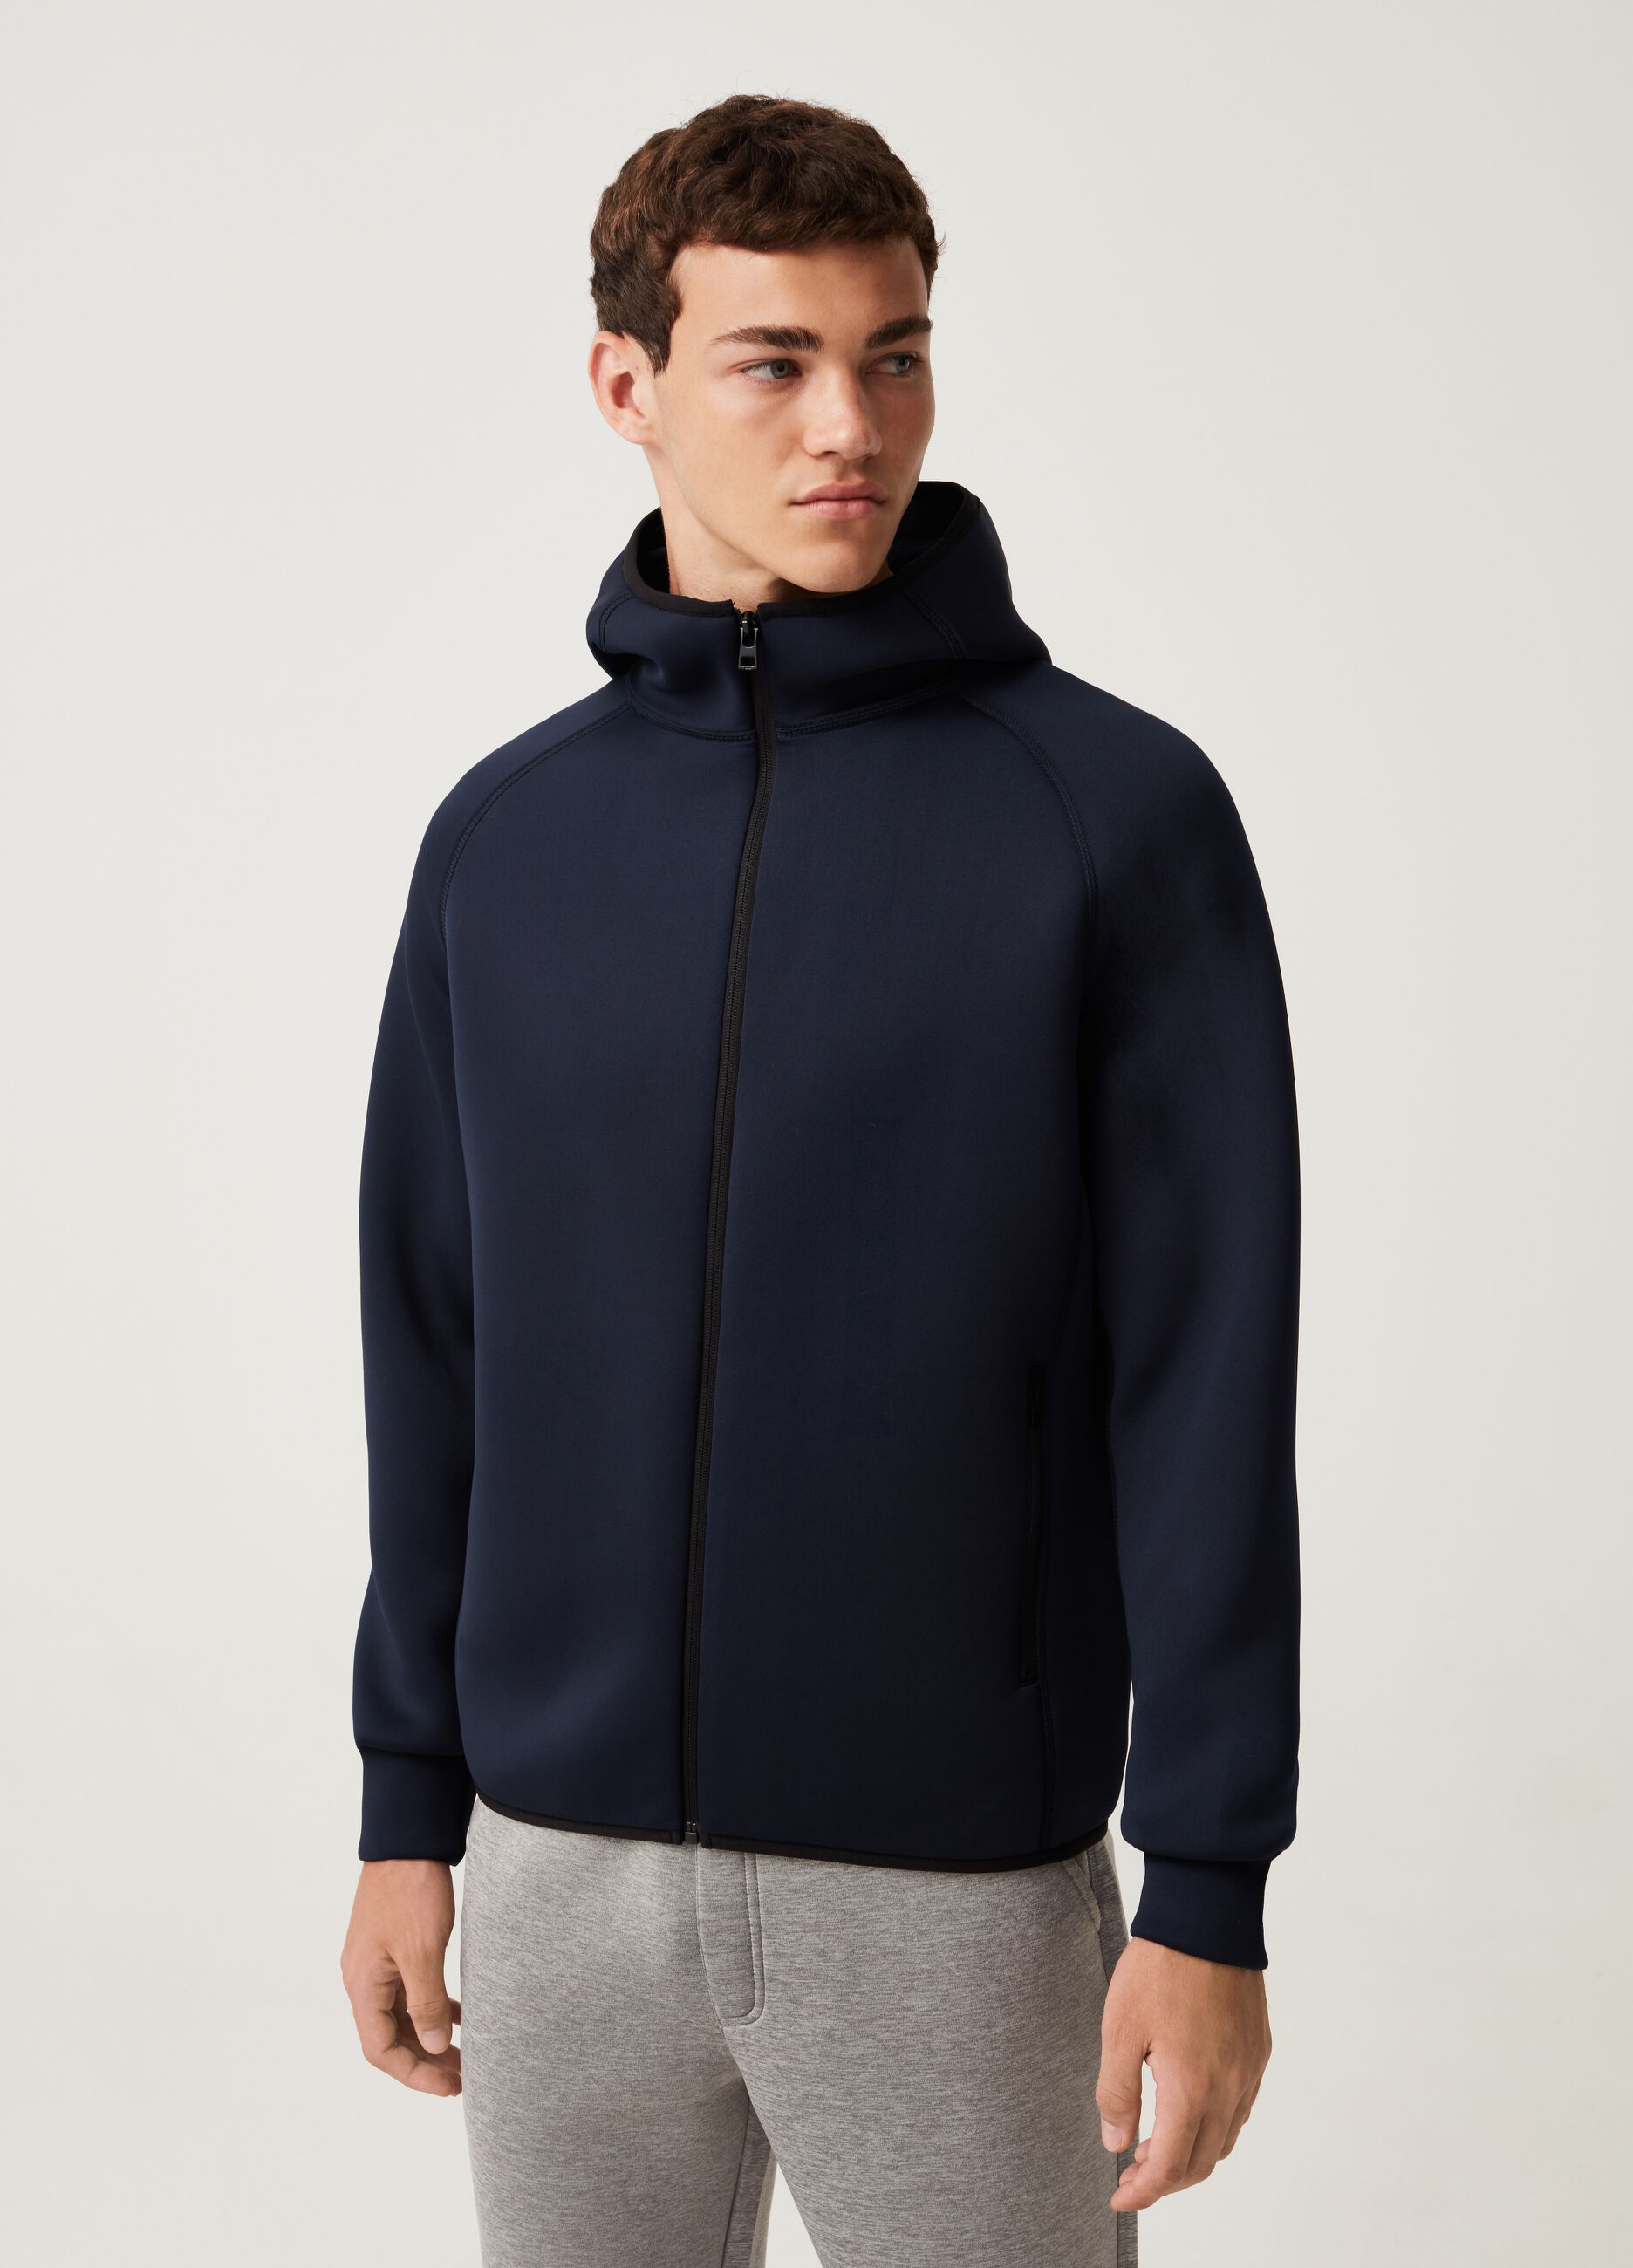 Full-zip sweatshirt with hood and raglan sleeves.